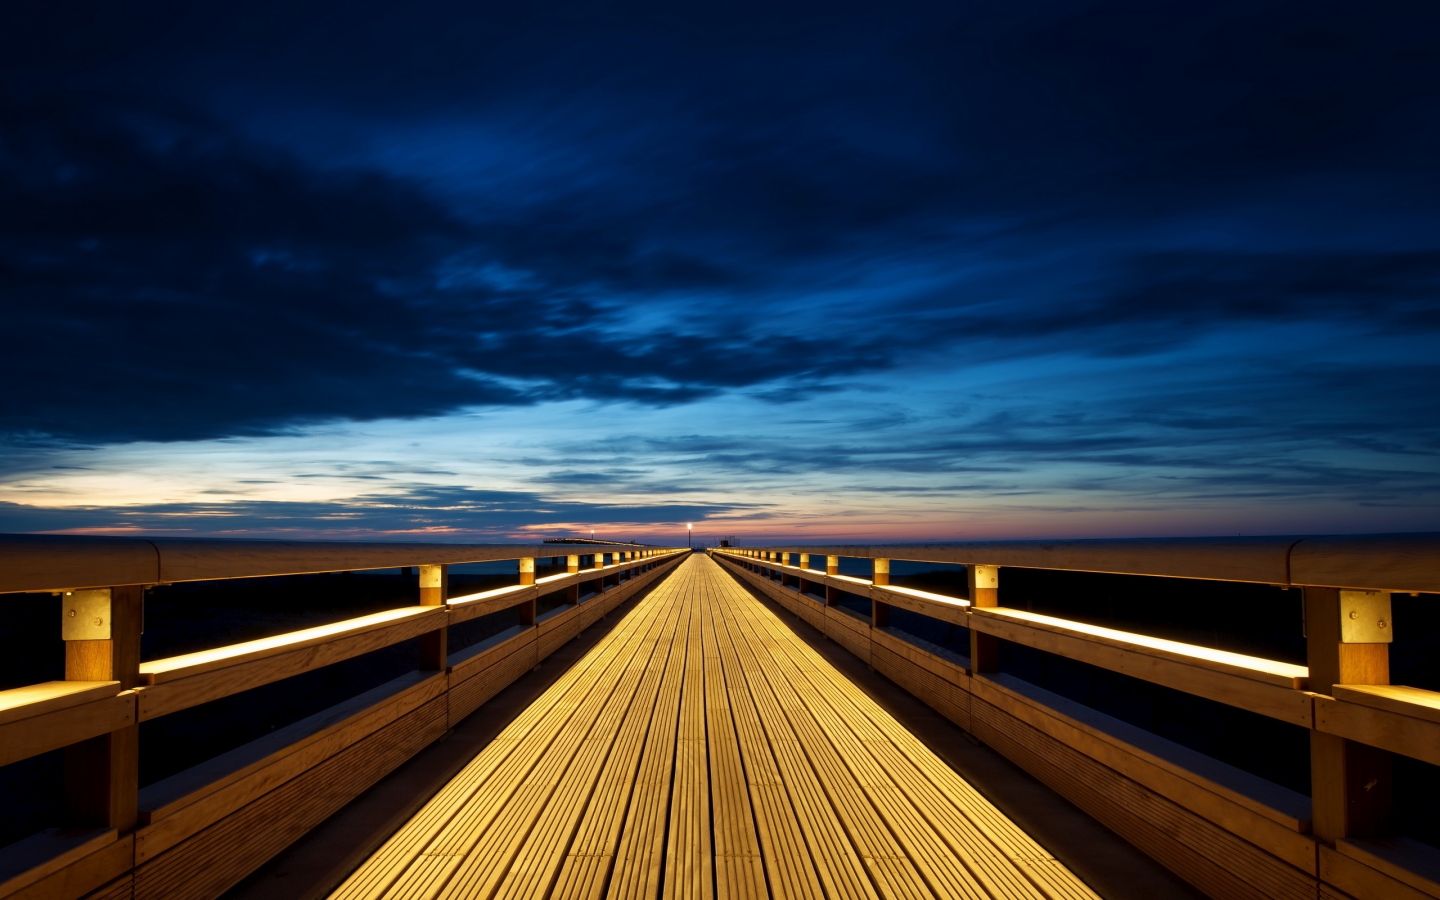 Wood Bridge for 1440 x 900 widescreen resolution